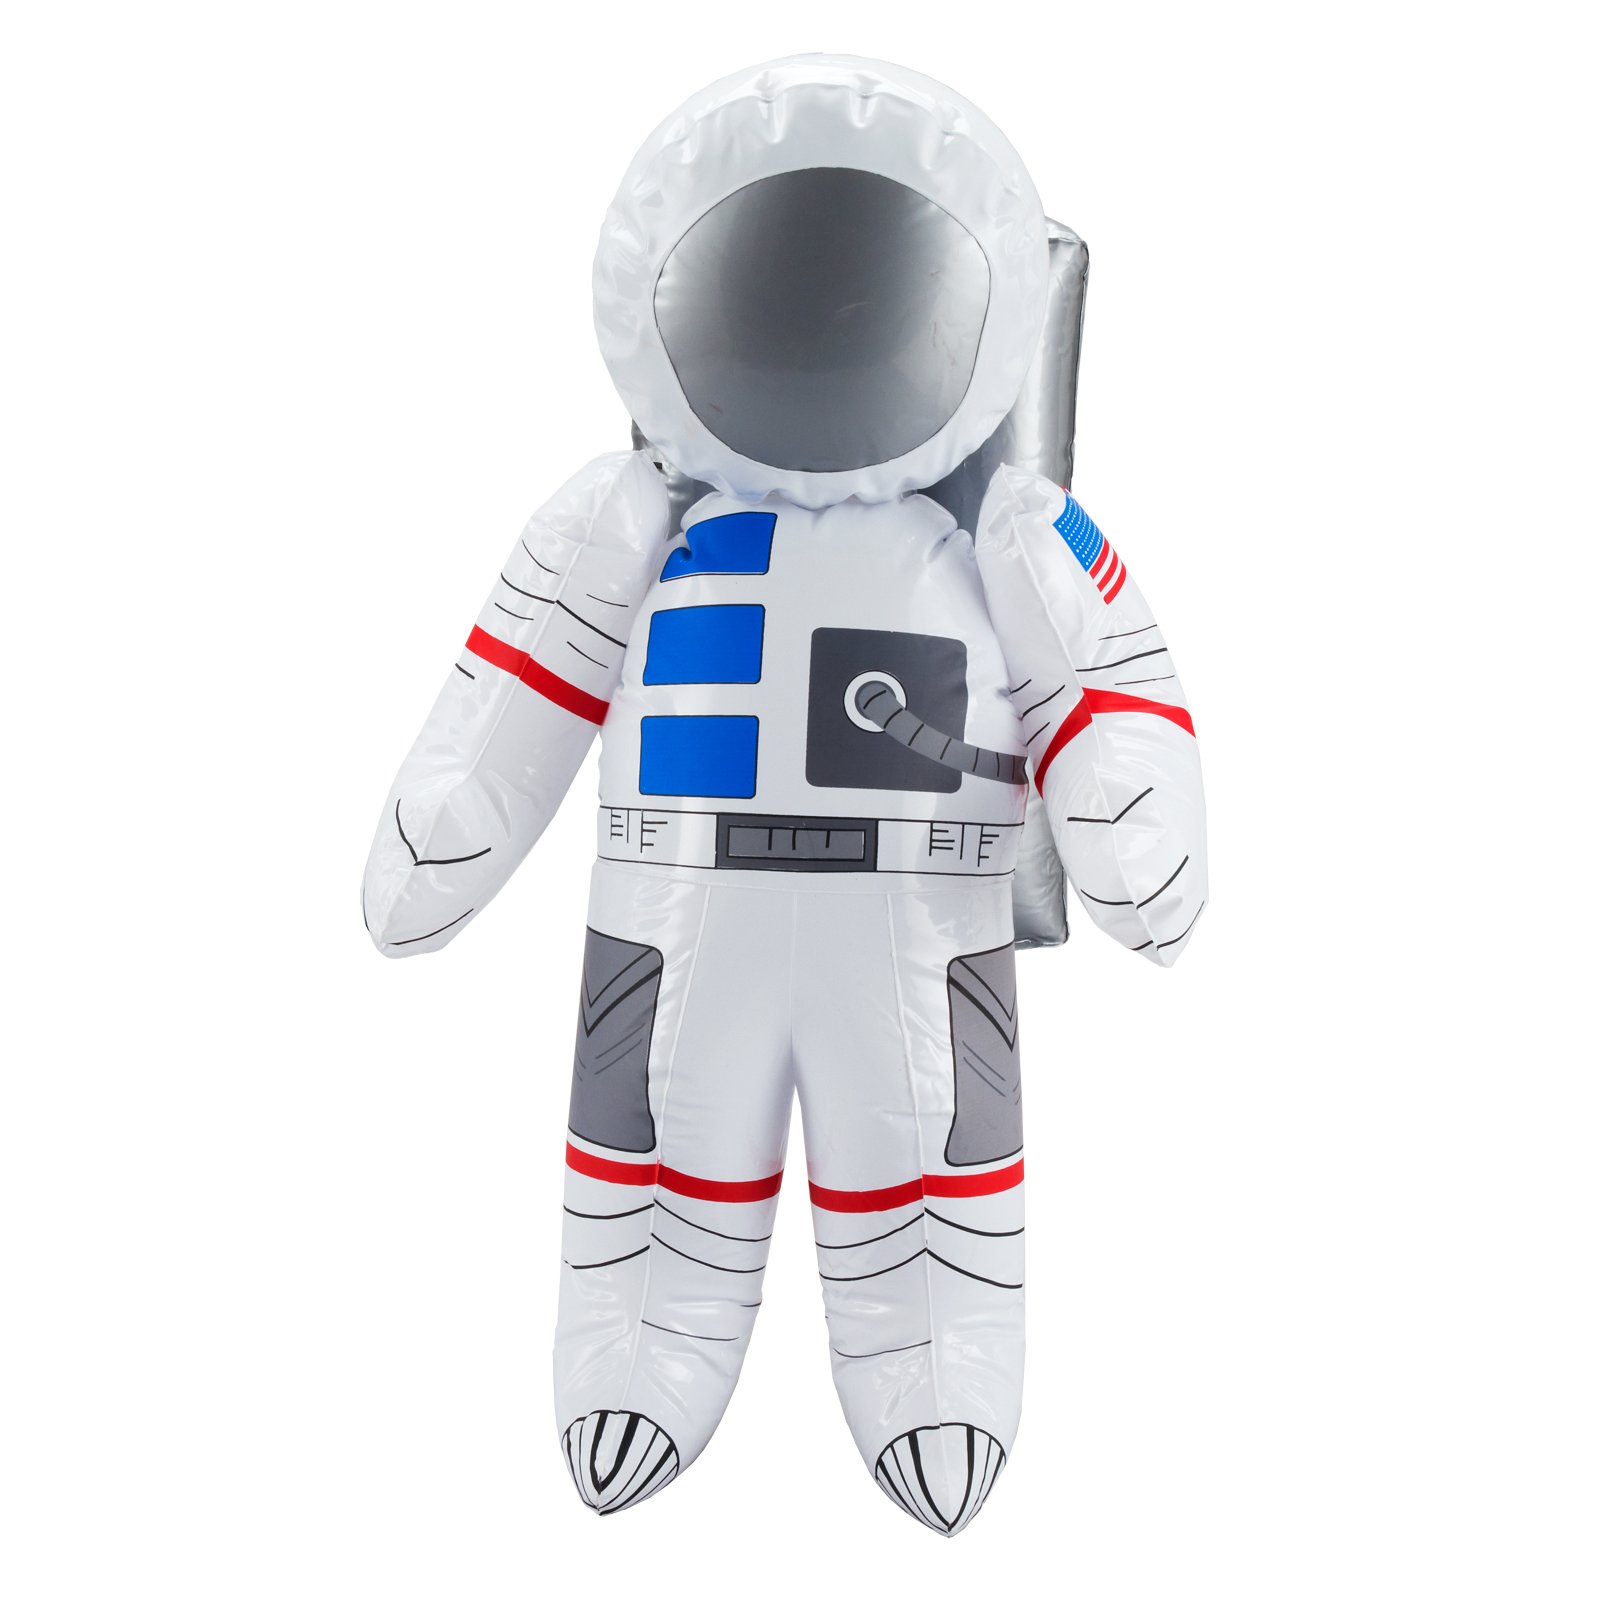 Костюм скафандр. Космический костюм. Костюм Космонавта. Костюм астронавта для детей. Костюм скафандр Космонавта.